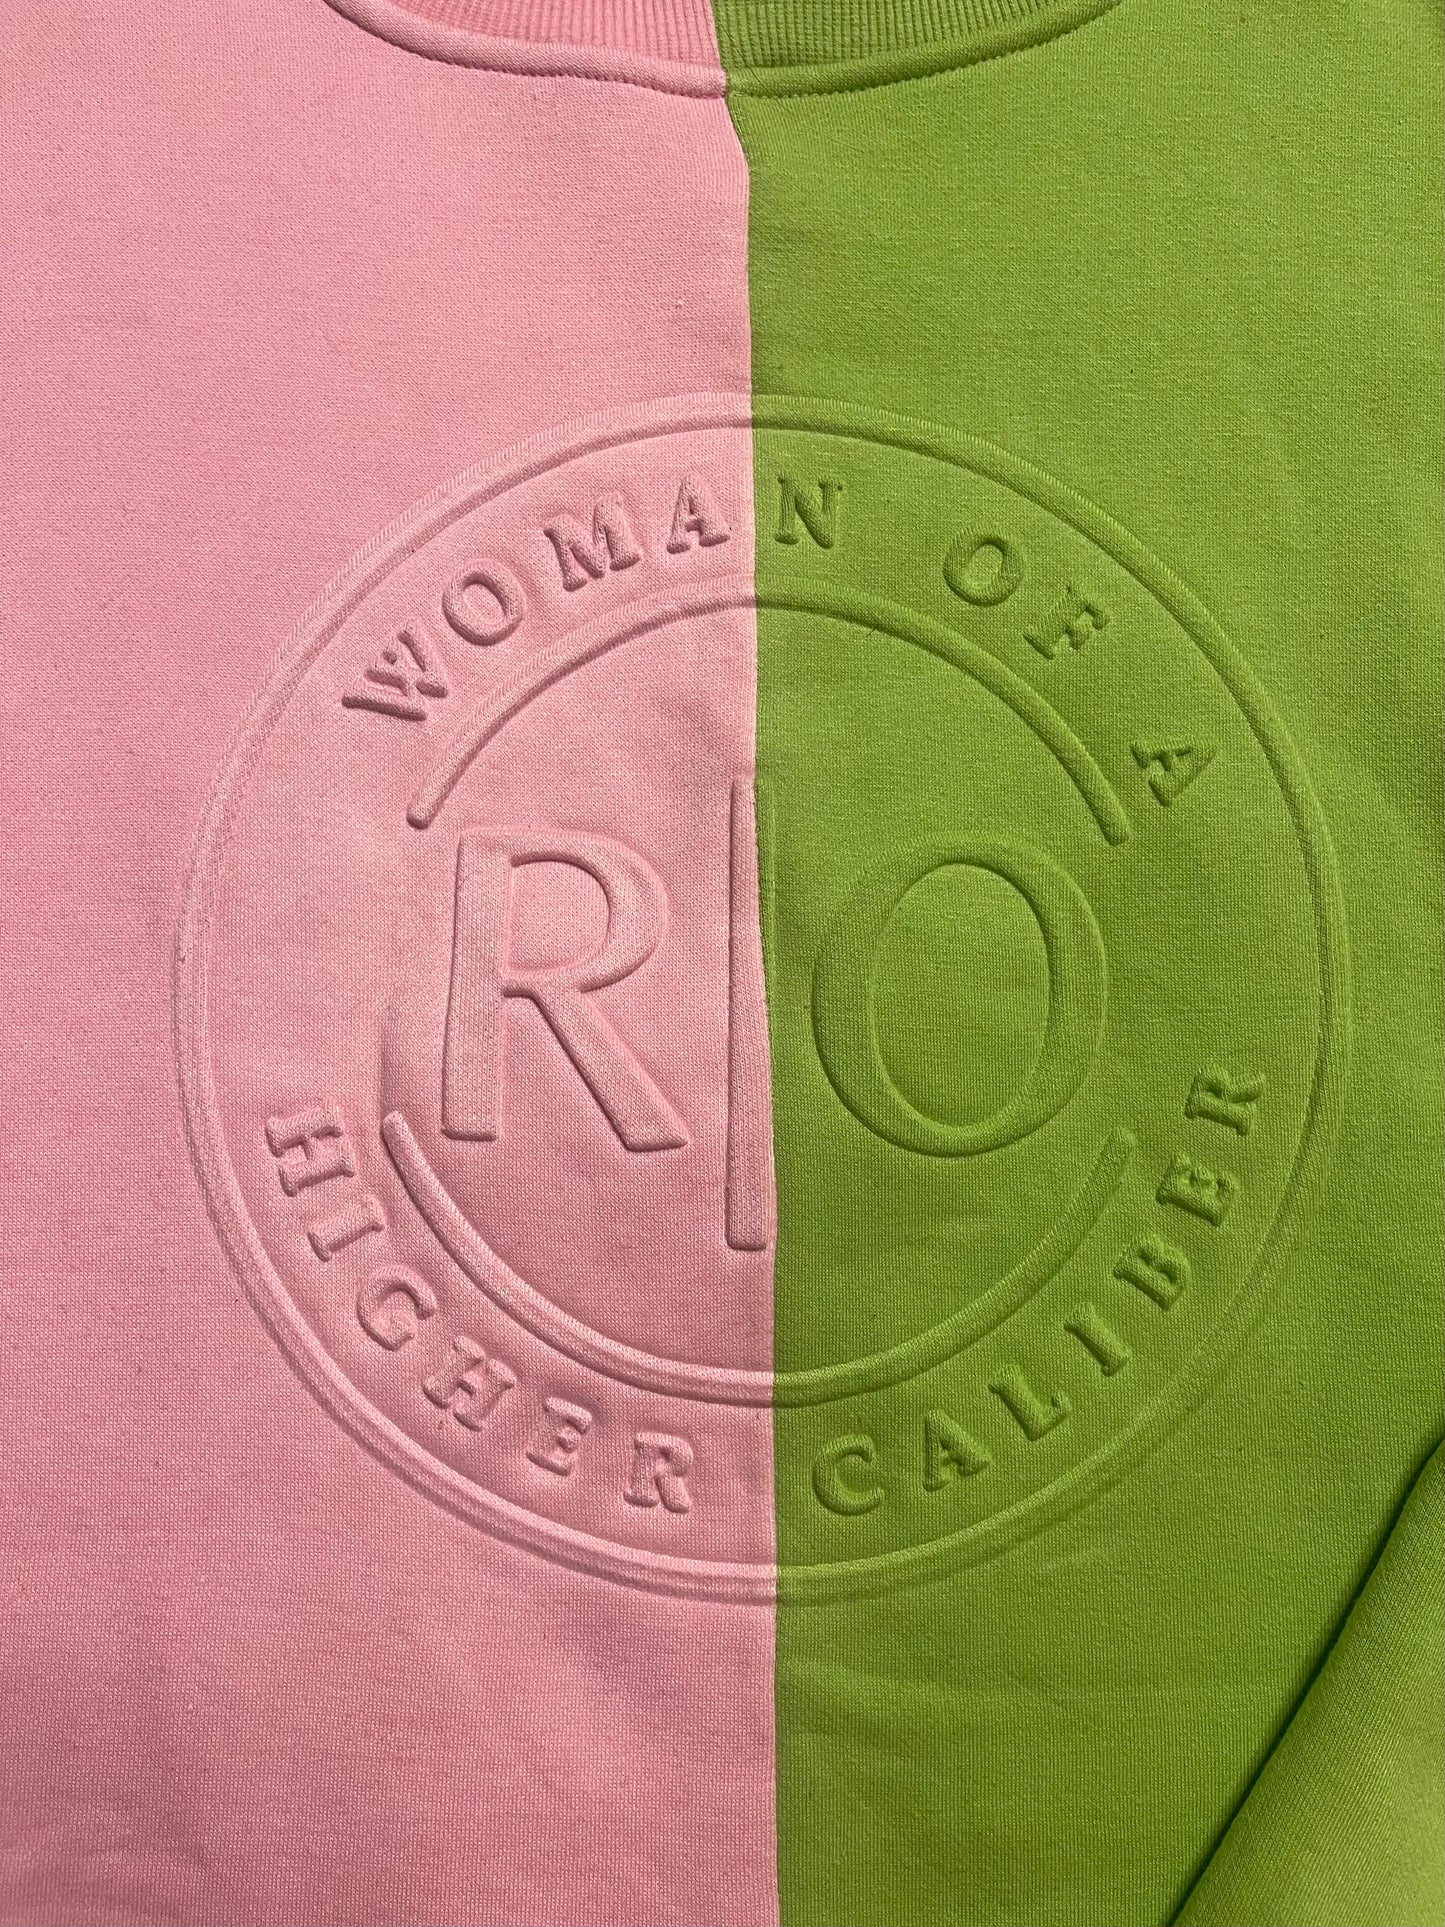 R|O Divine Sweatshirts Collection (Pre-Order)